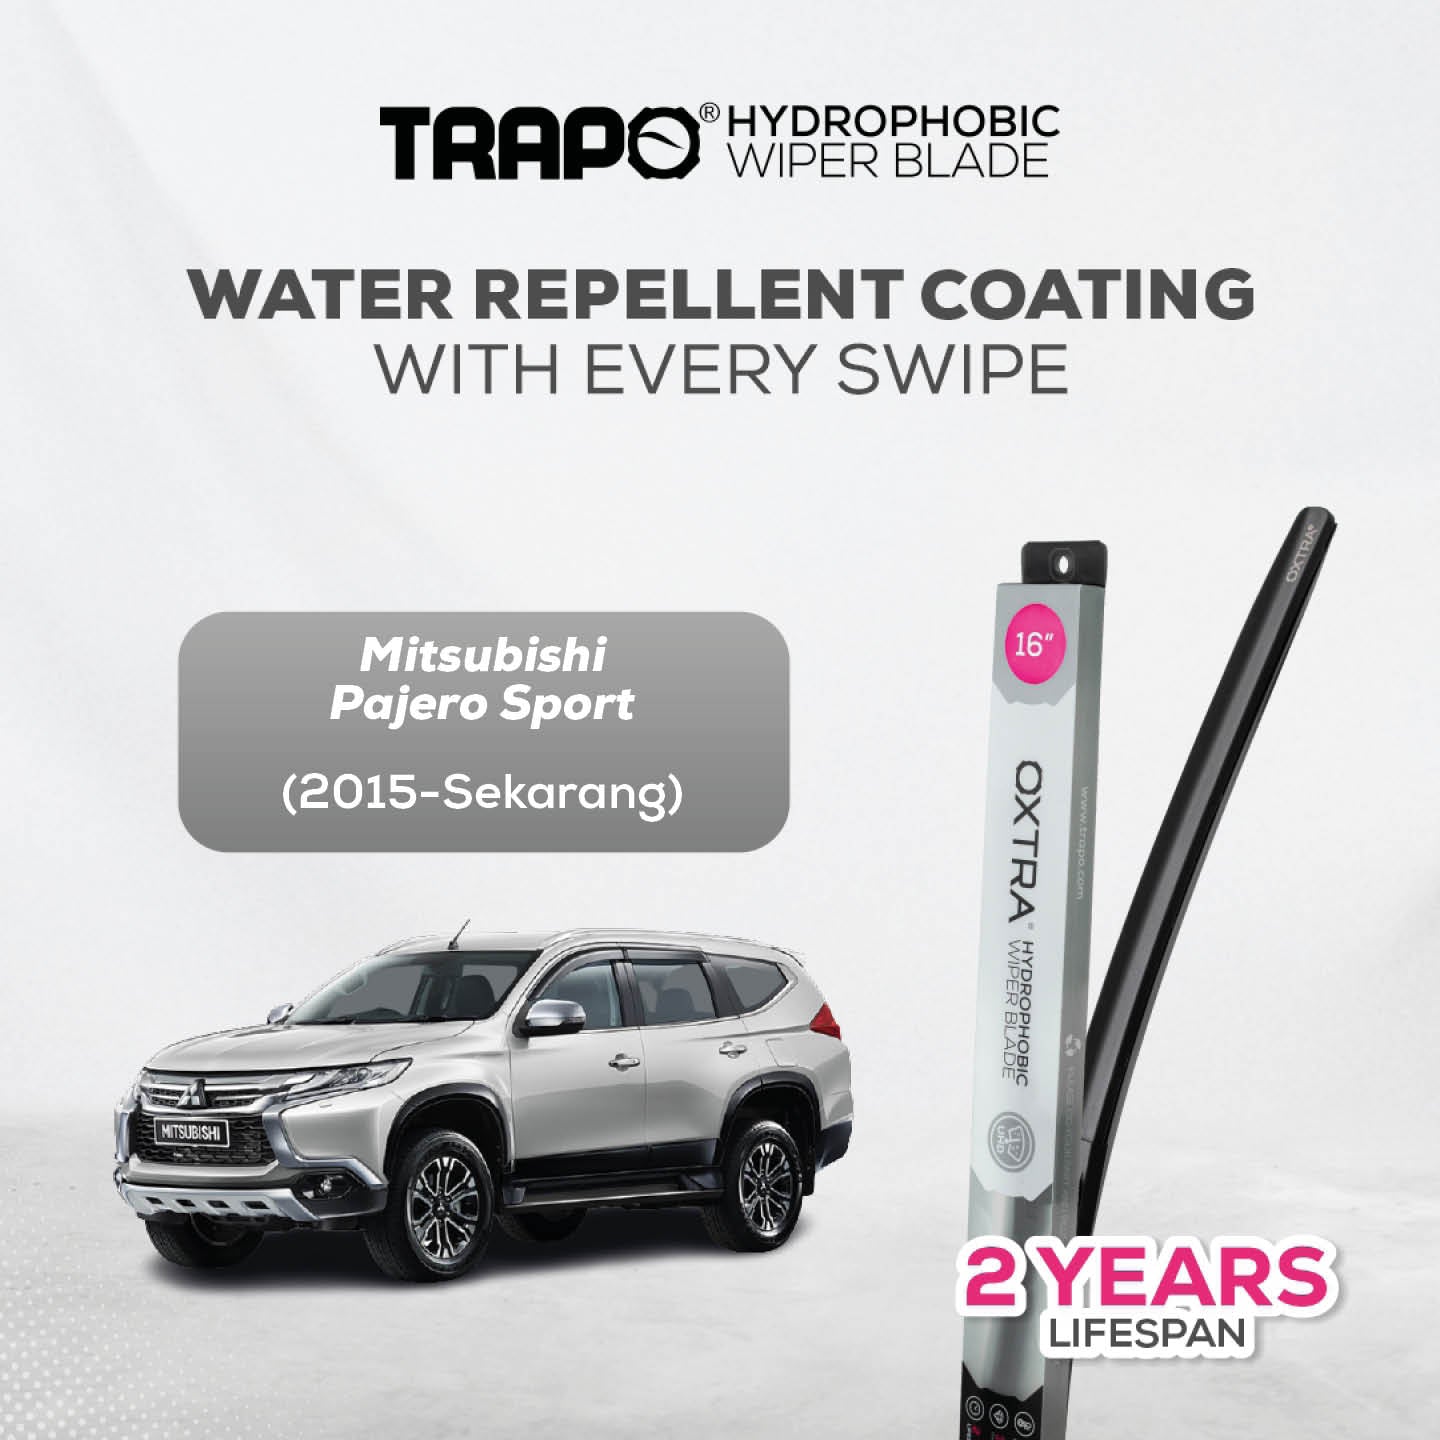 Trapo Hydrophobic Wiper Blade Mitsubishi Pajero Sport (2015-Sekarang)